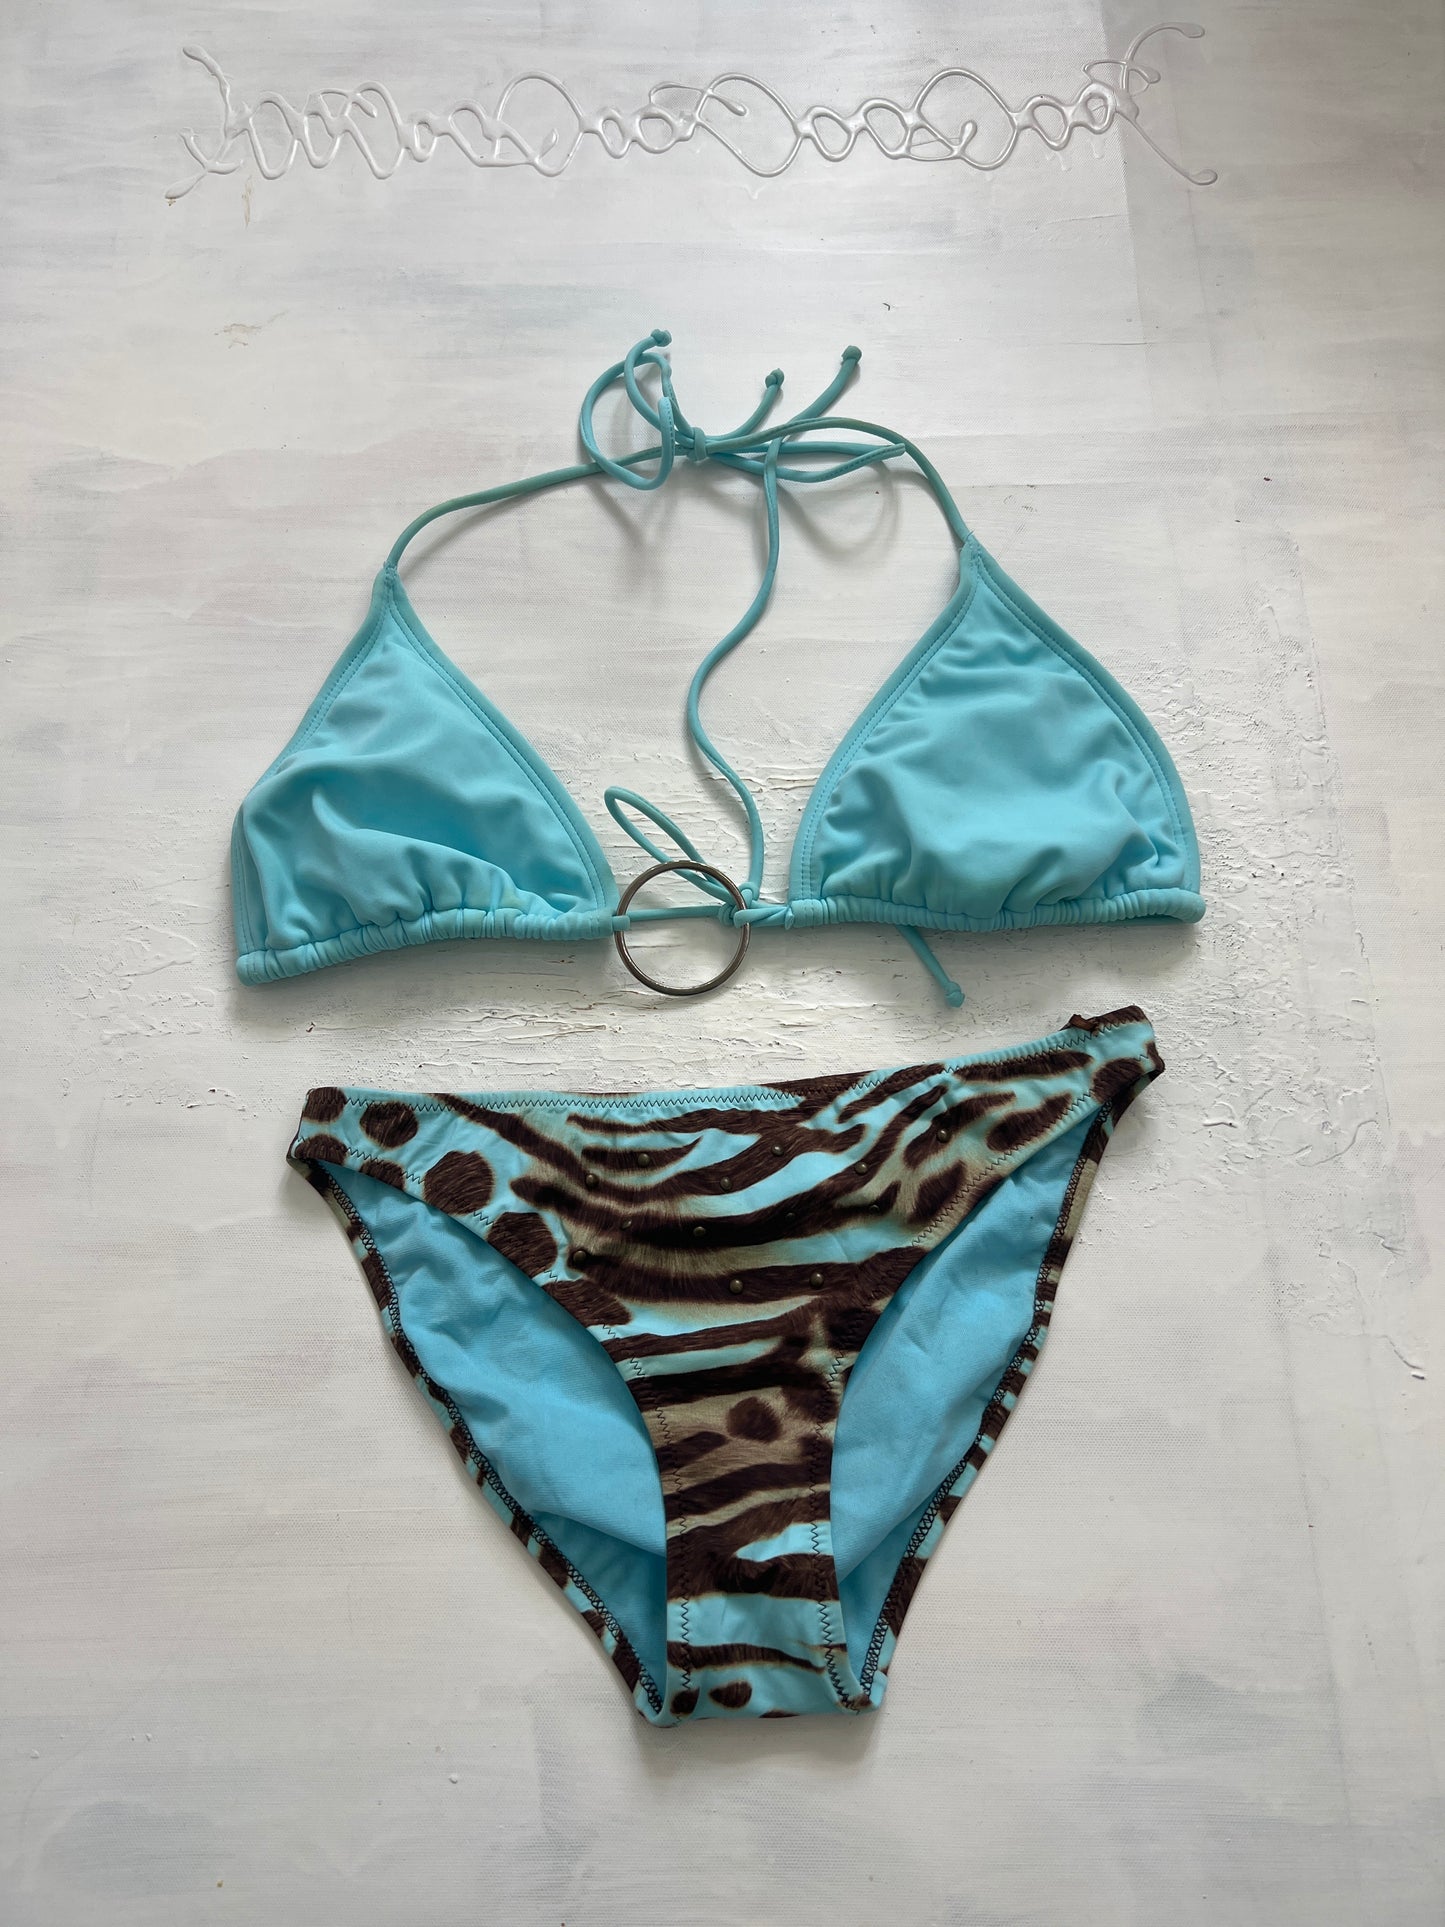 GIRLS TRIP DROP | large blue bikini top with animal print bottoms